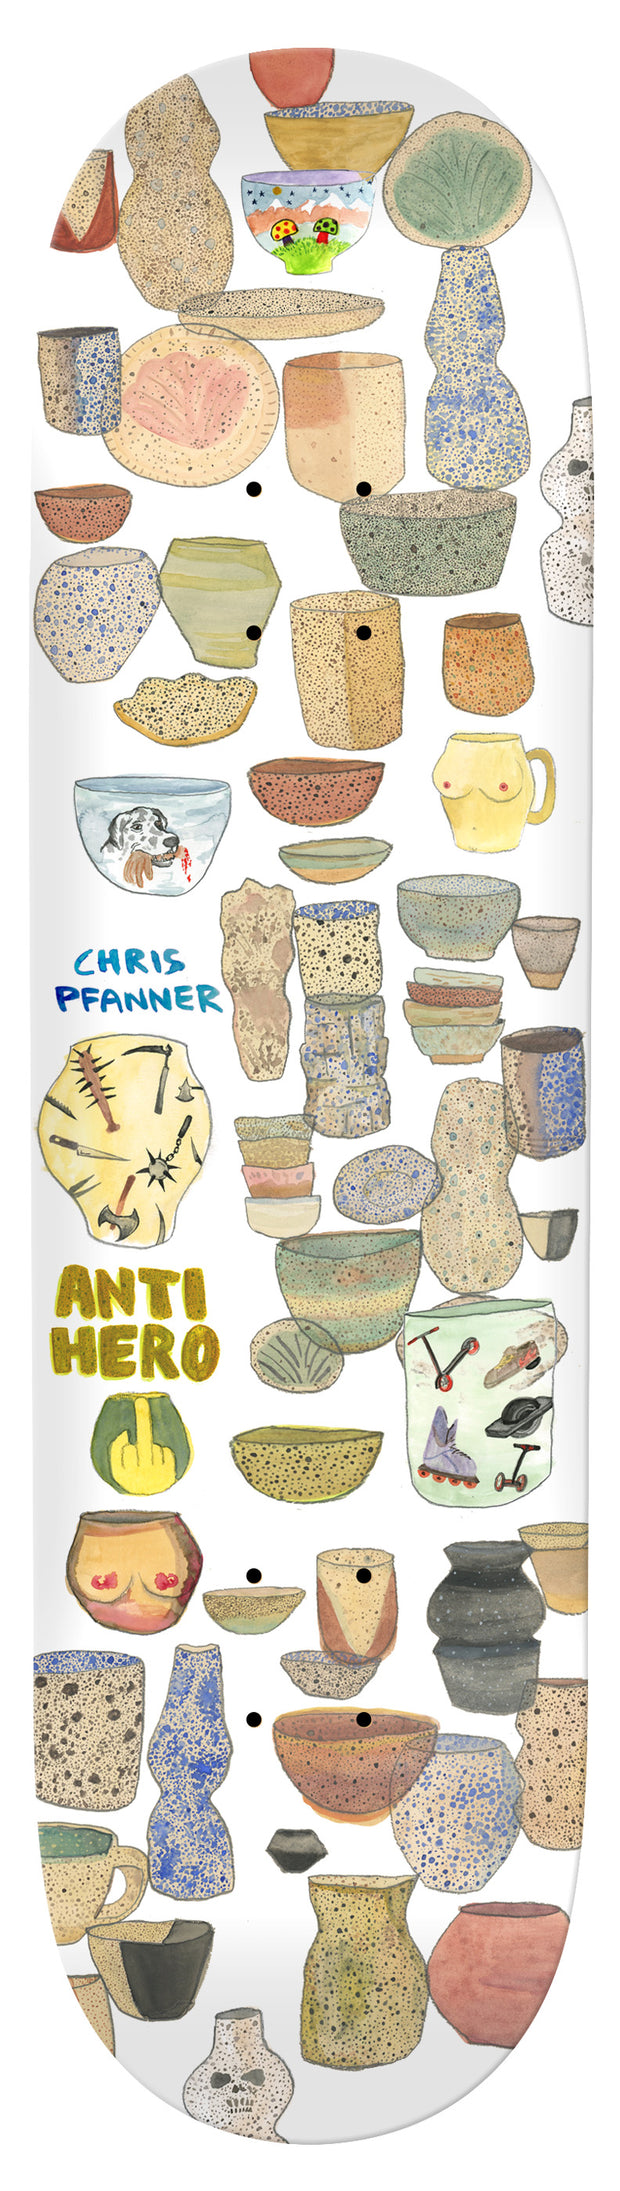 Antihero - Pfanner Out of Step Deck 8.06"